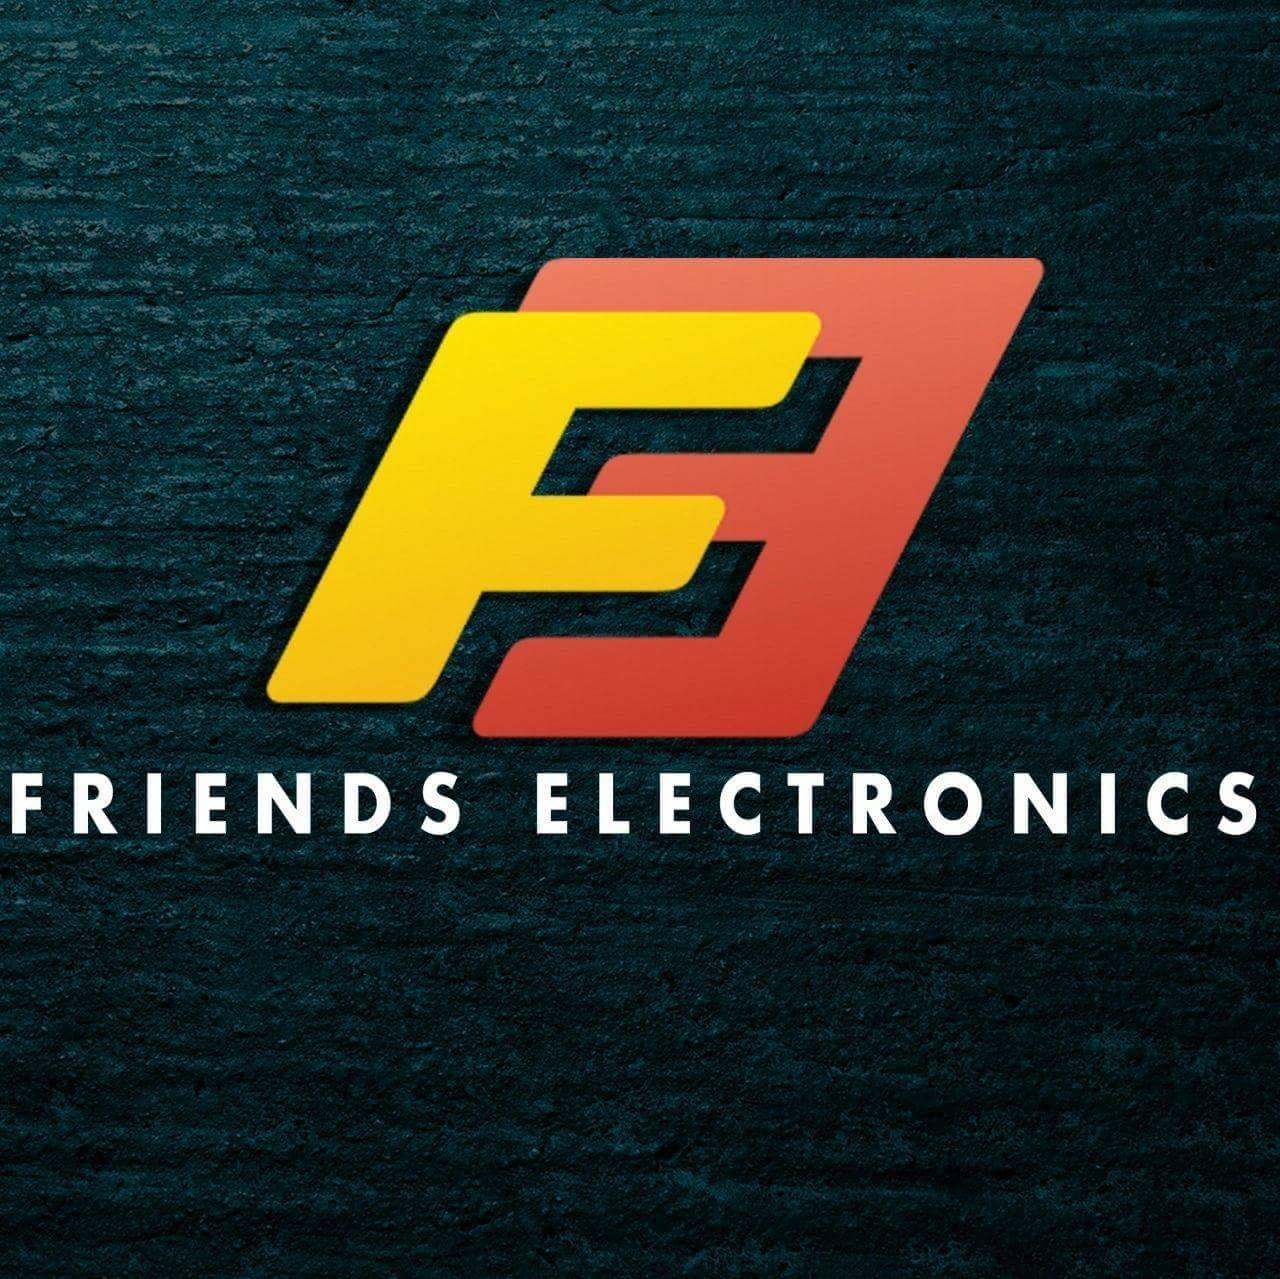 Friends electronics